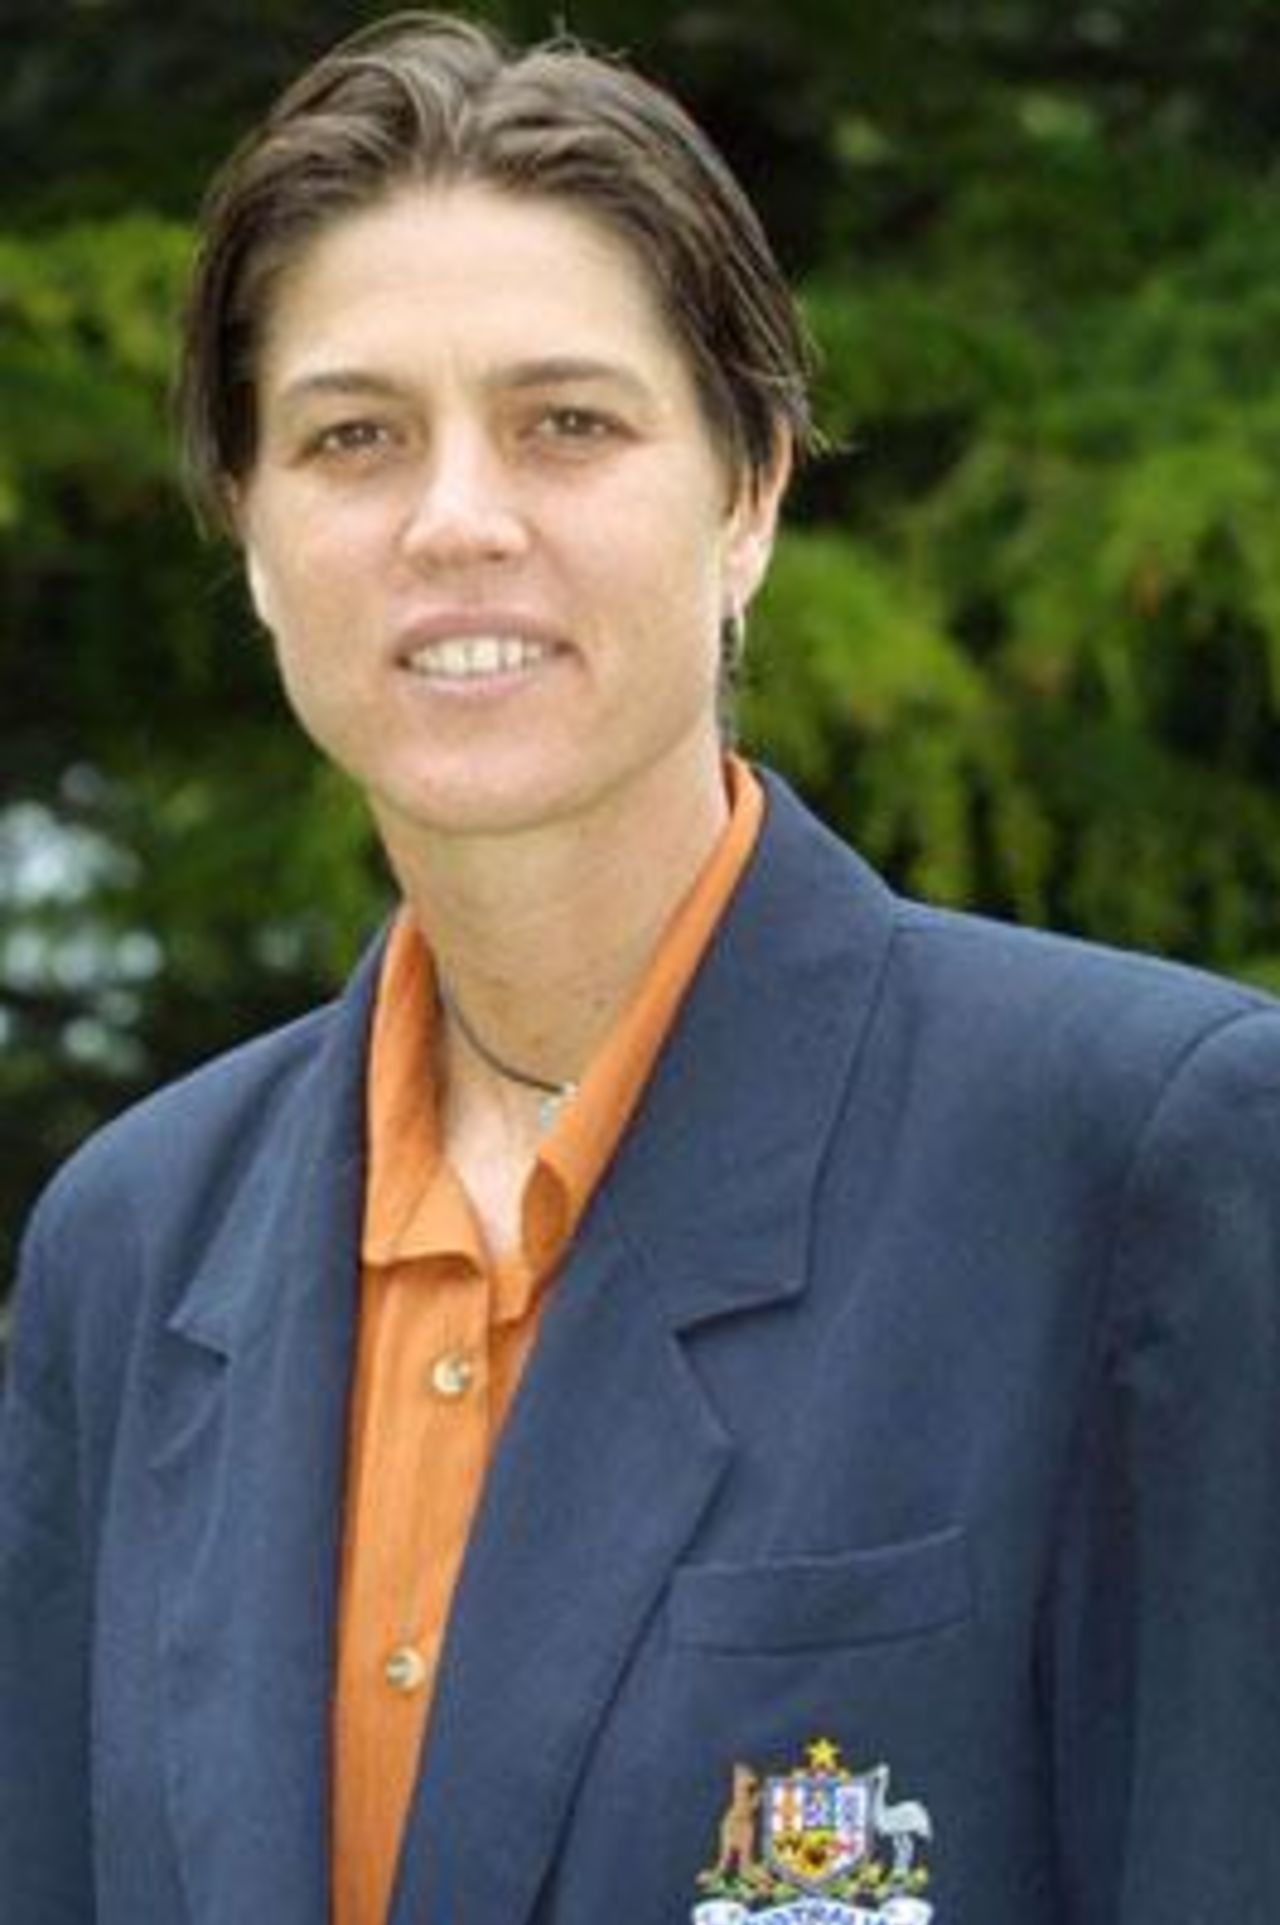 Portrait of Zoe Goss - Australia player in the CricInfo Women's World Cup 2000